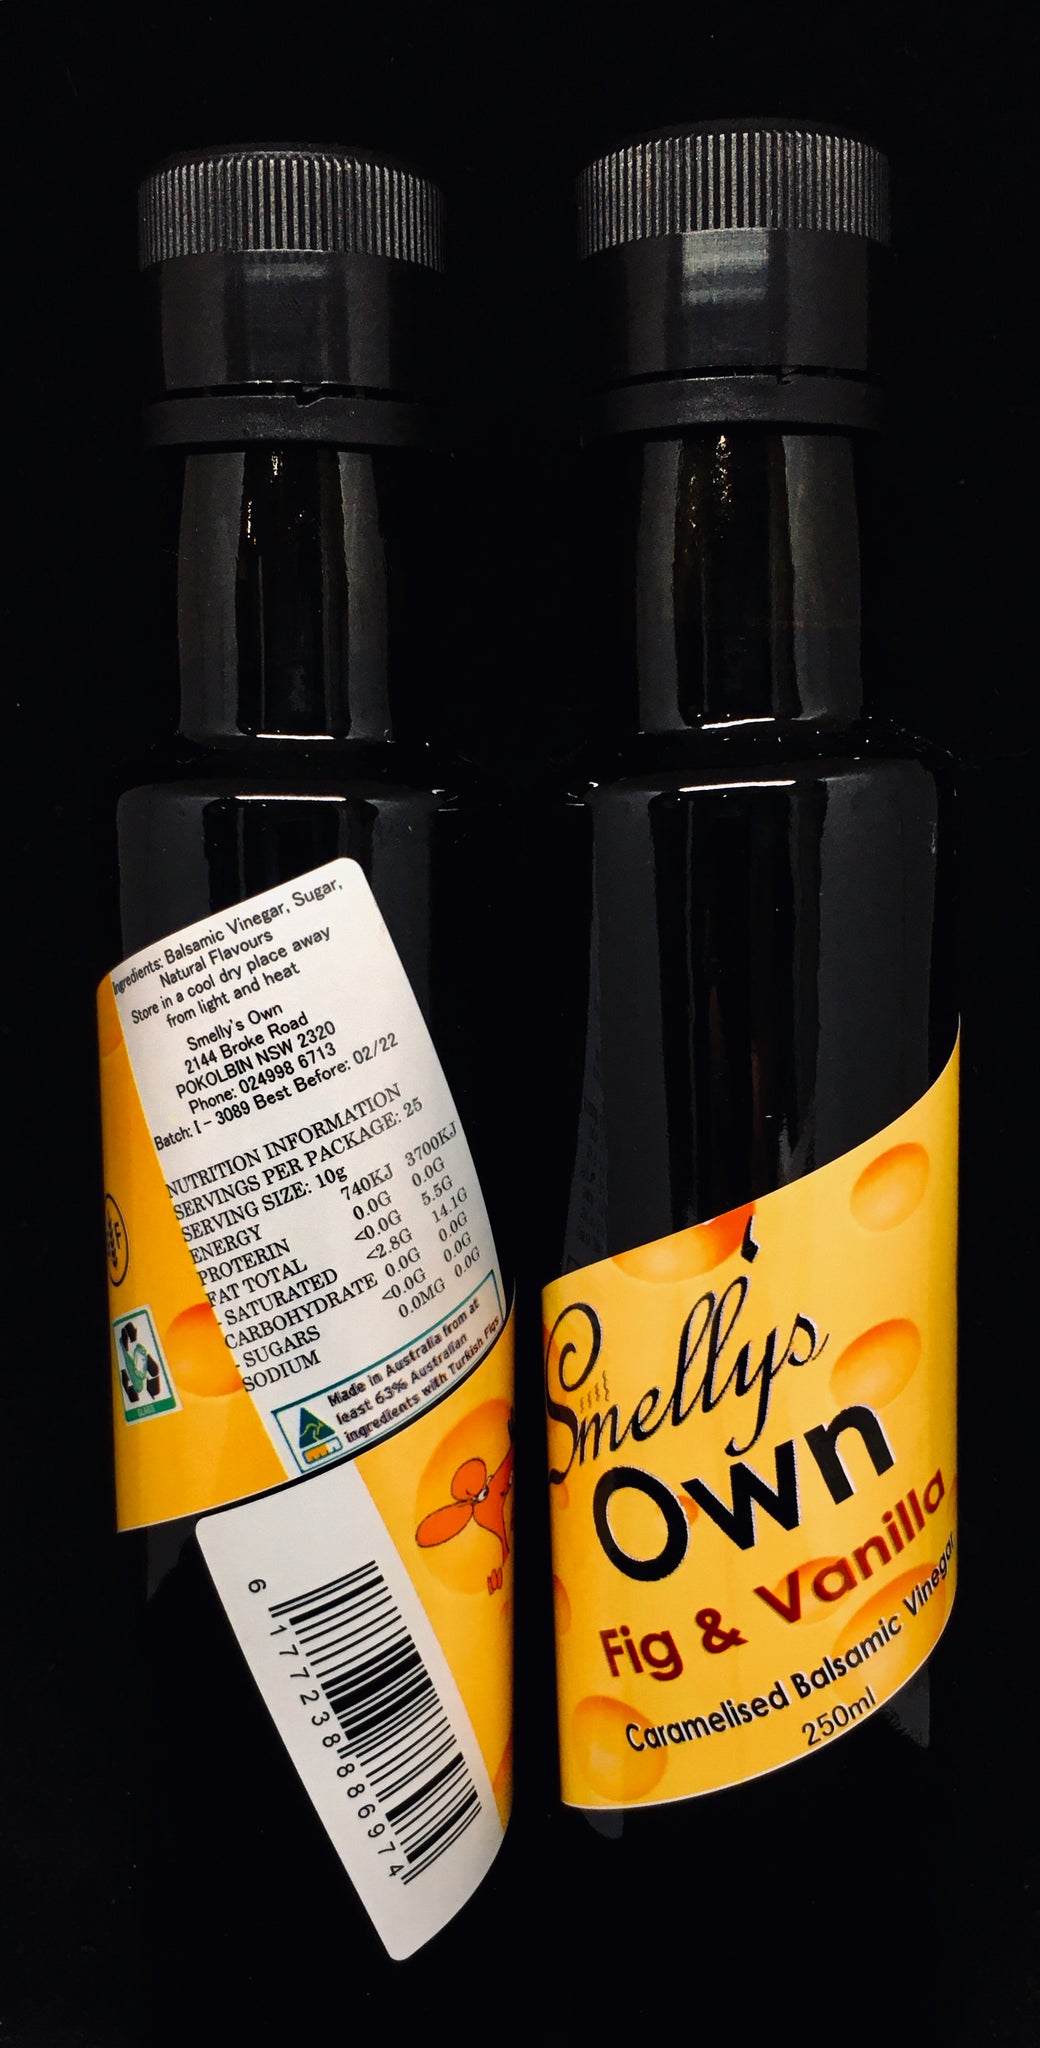 Smelly's Own - Fig & Vanilla Balsamic Vinegar